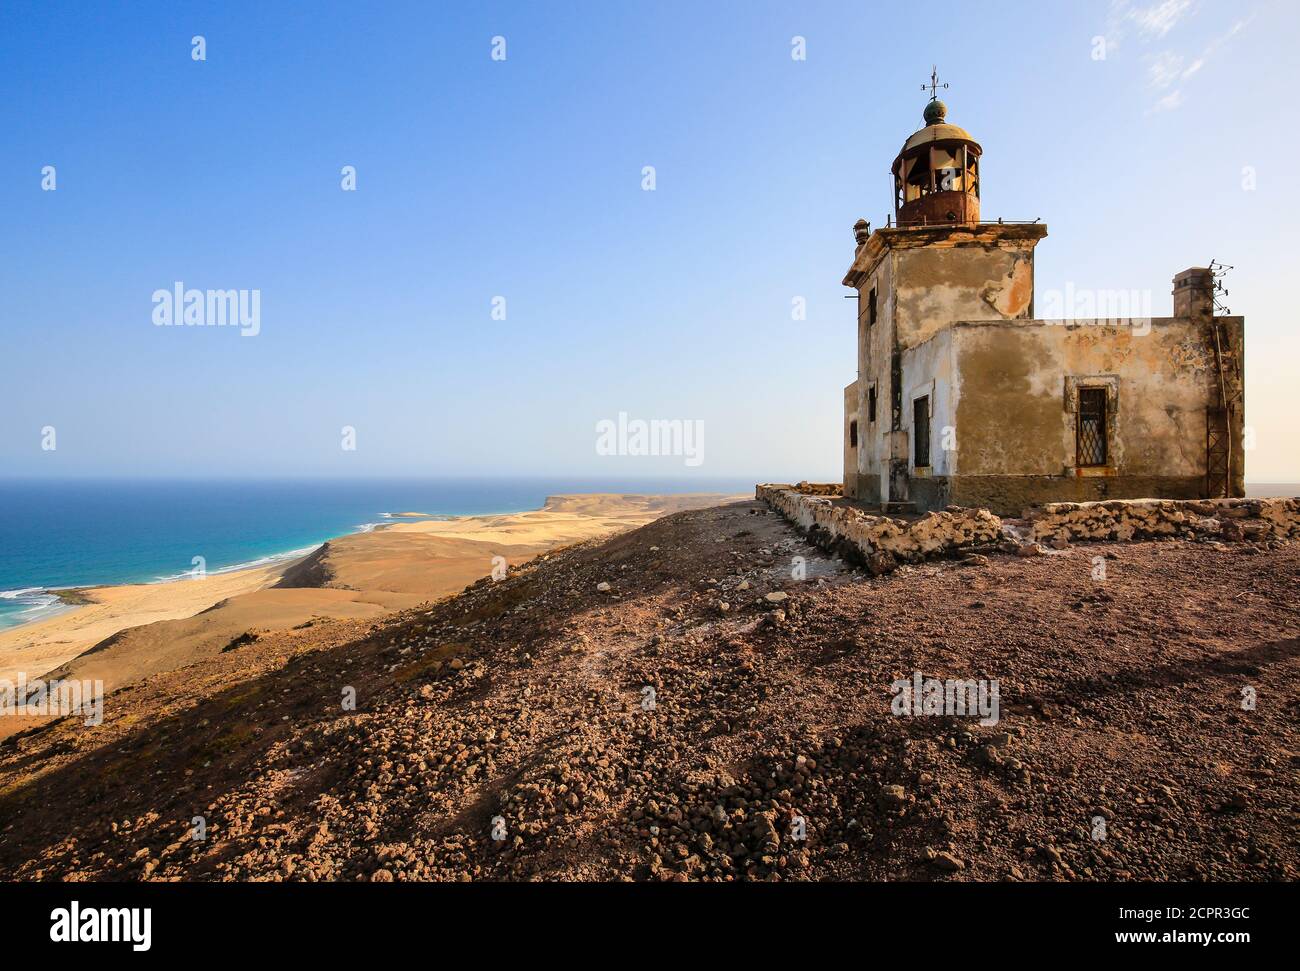 Morro Negro, Boa Vista, Cape Verde - Lighthouse on the untouched east side of Boa Visa. Stock Photo